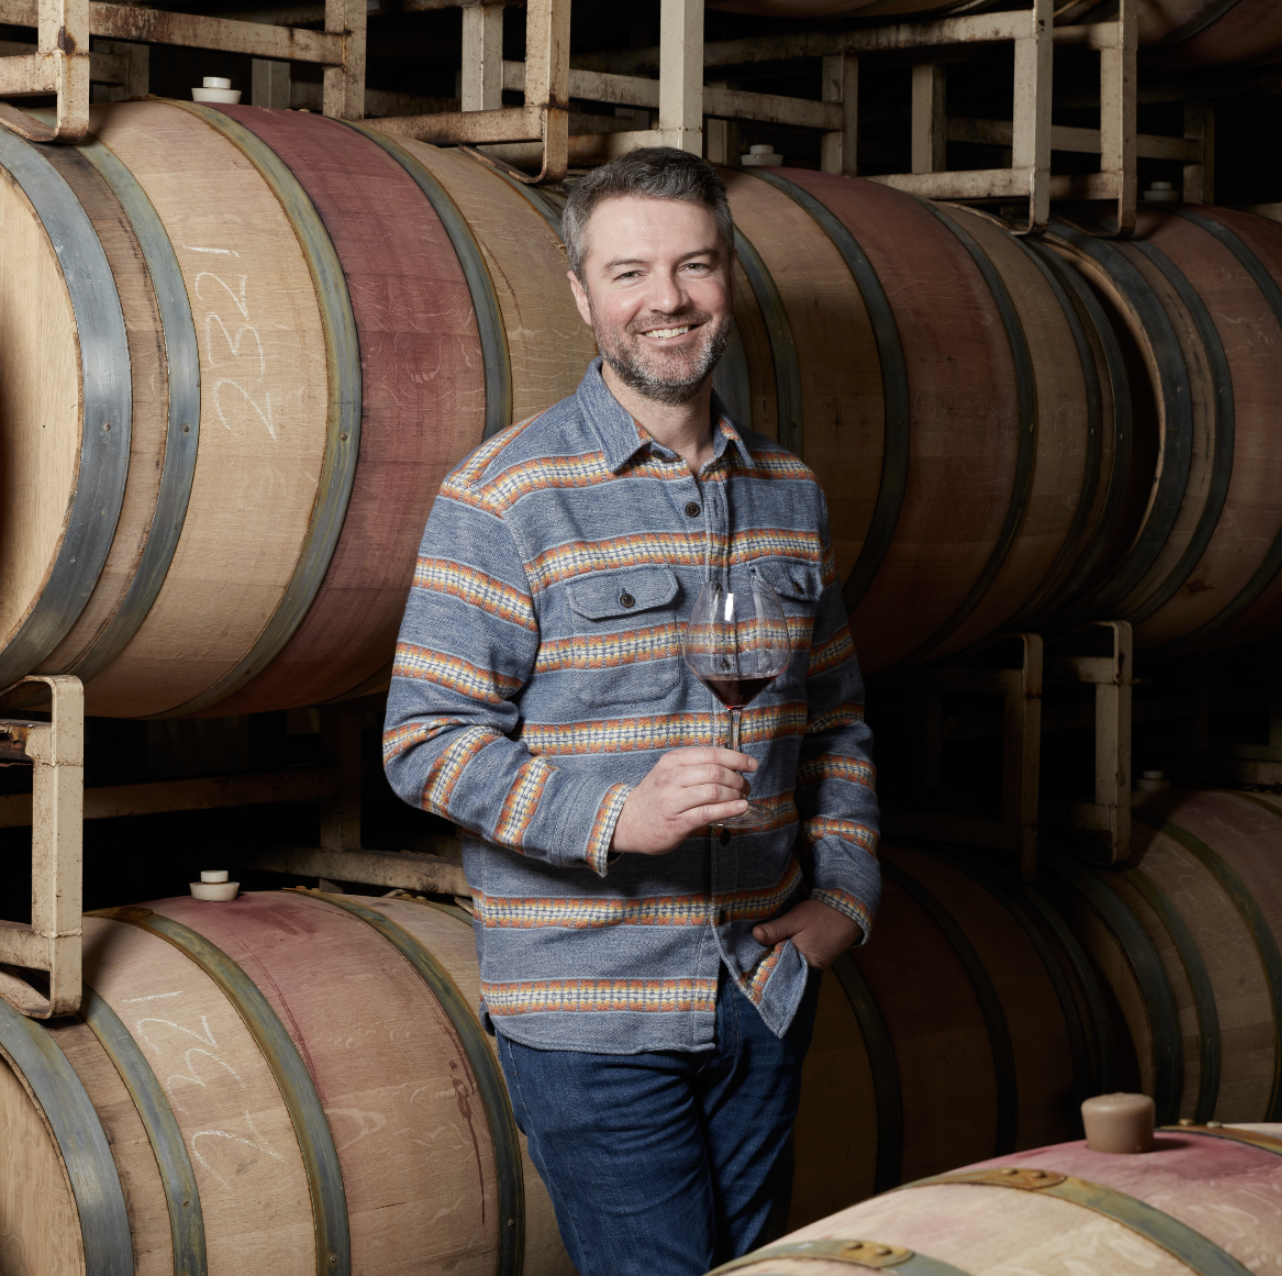 Matt holding Wine glass in barrel room